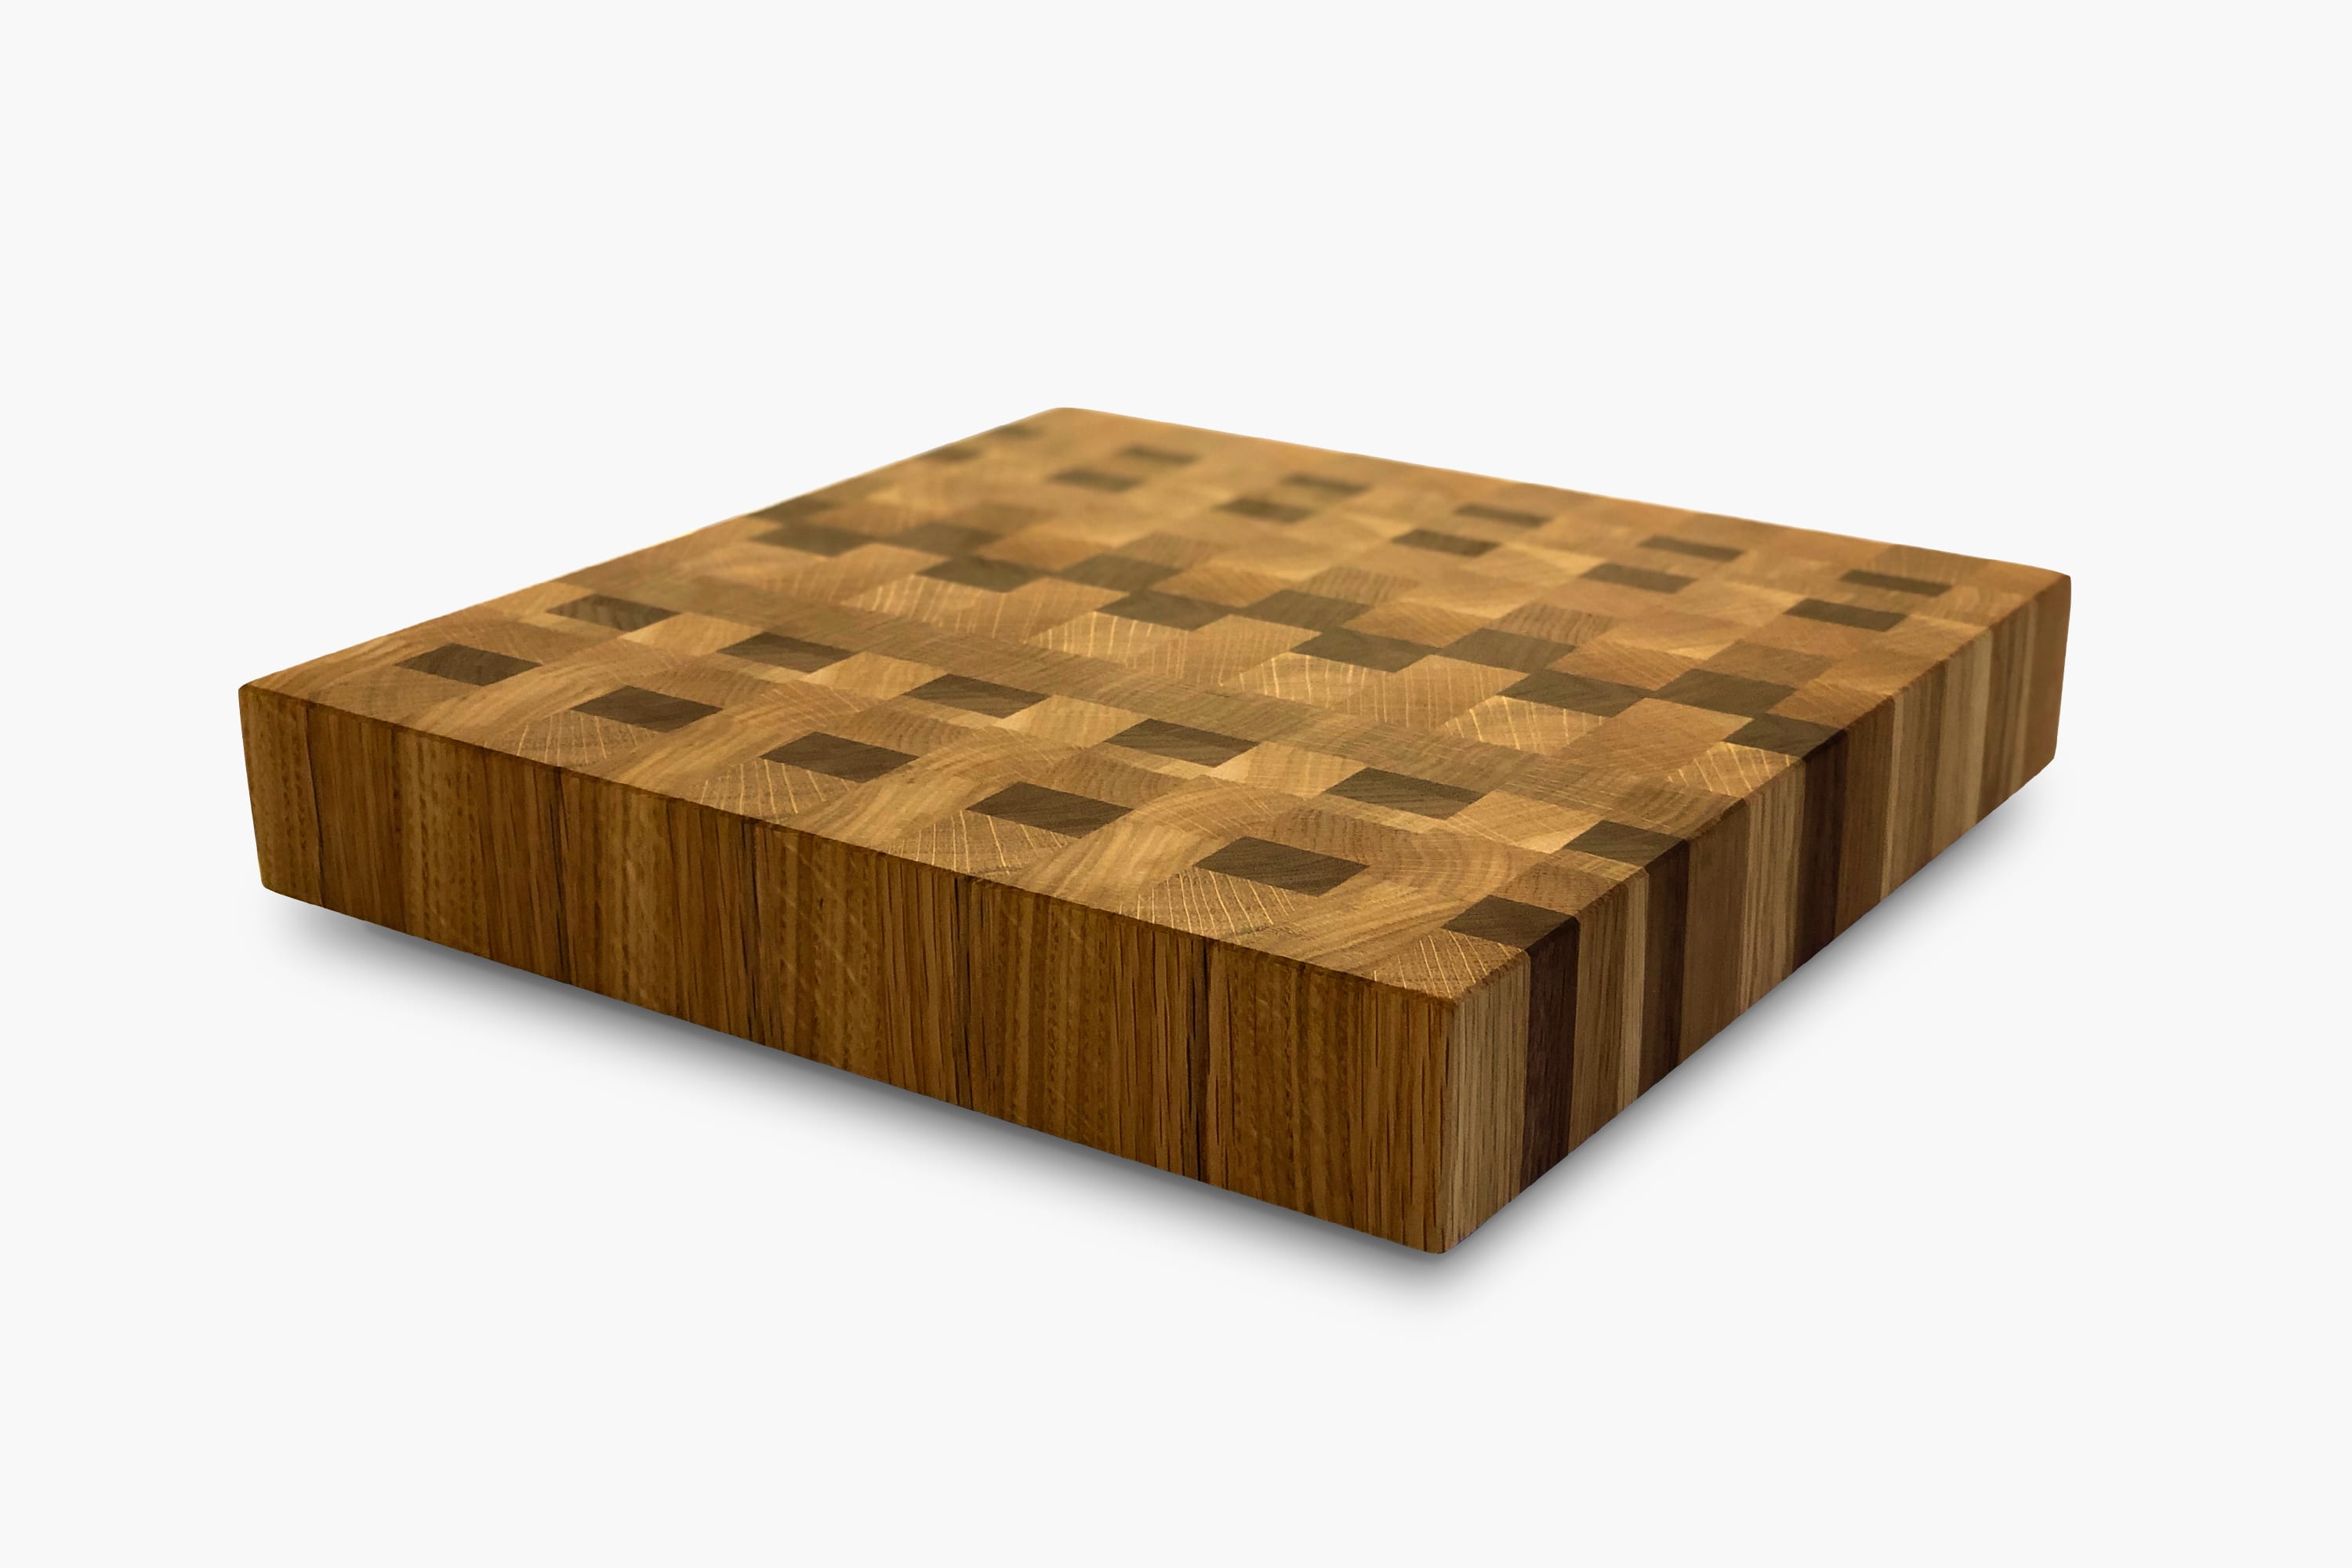 Wood Cutting Board, Large Cutting Board, With Rubberized Feet